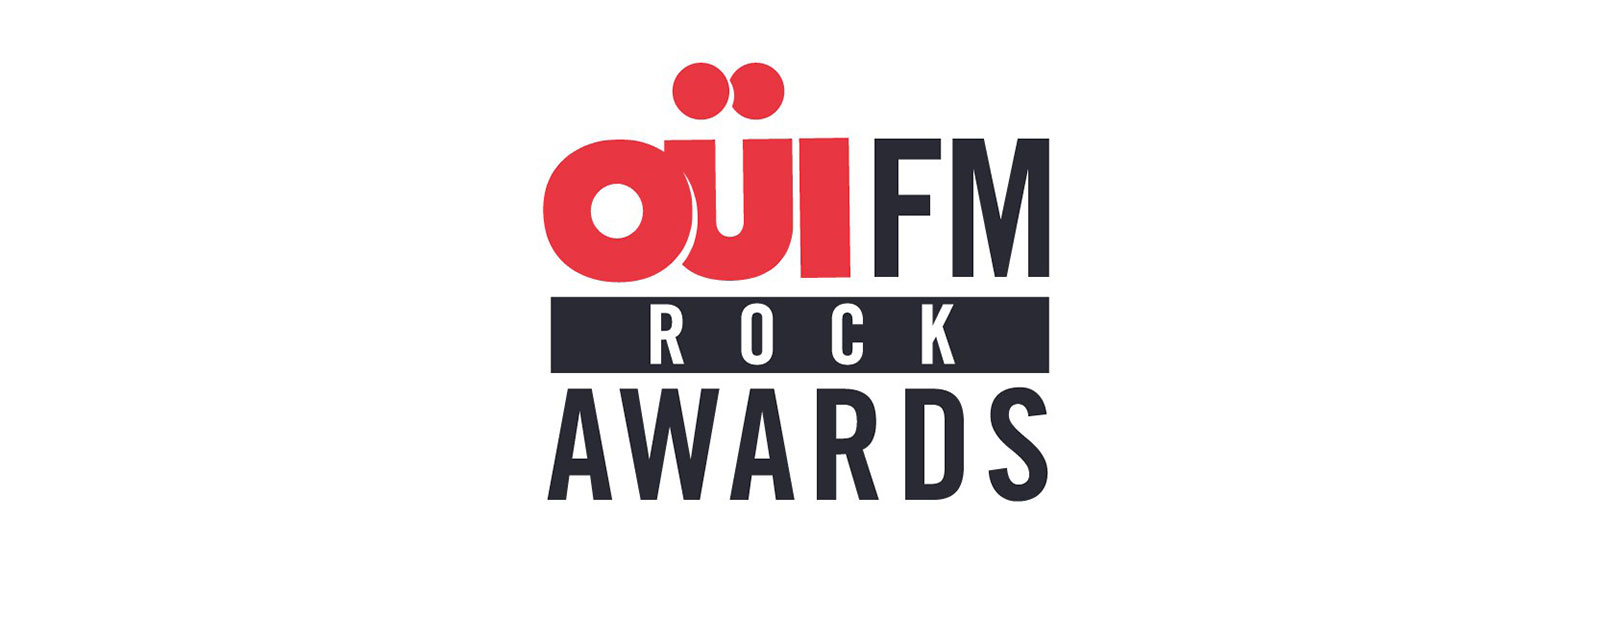 OÜI FM Rock Awards 2016